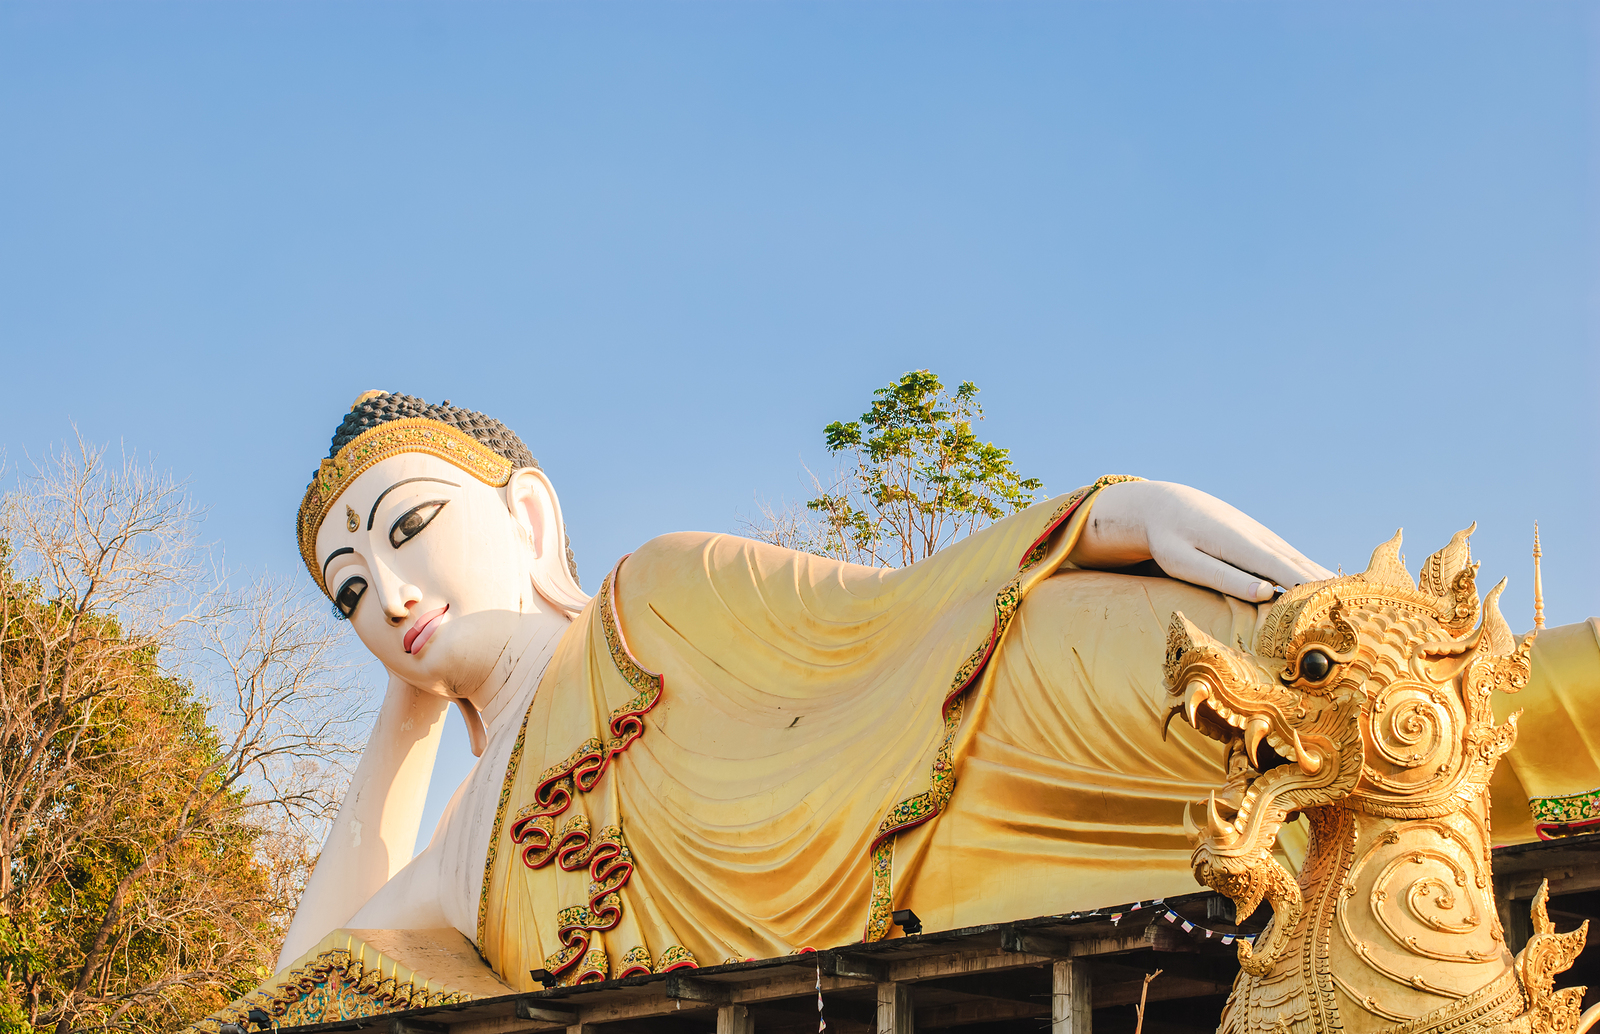 Reclining Buddha statue in Thailand 